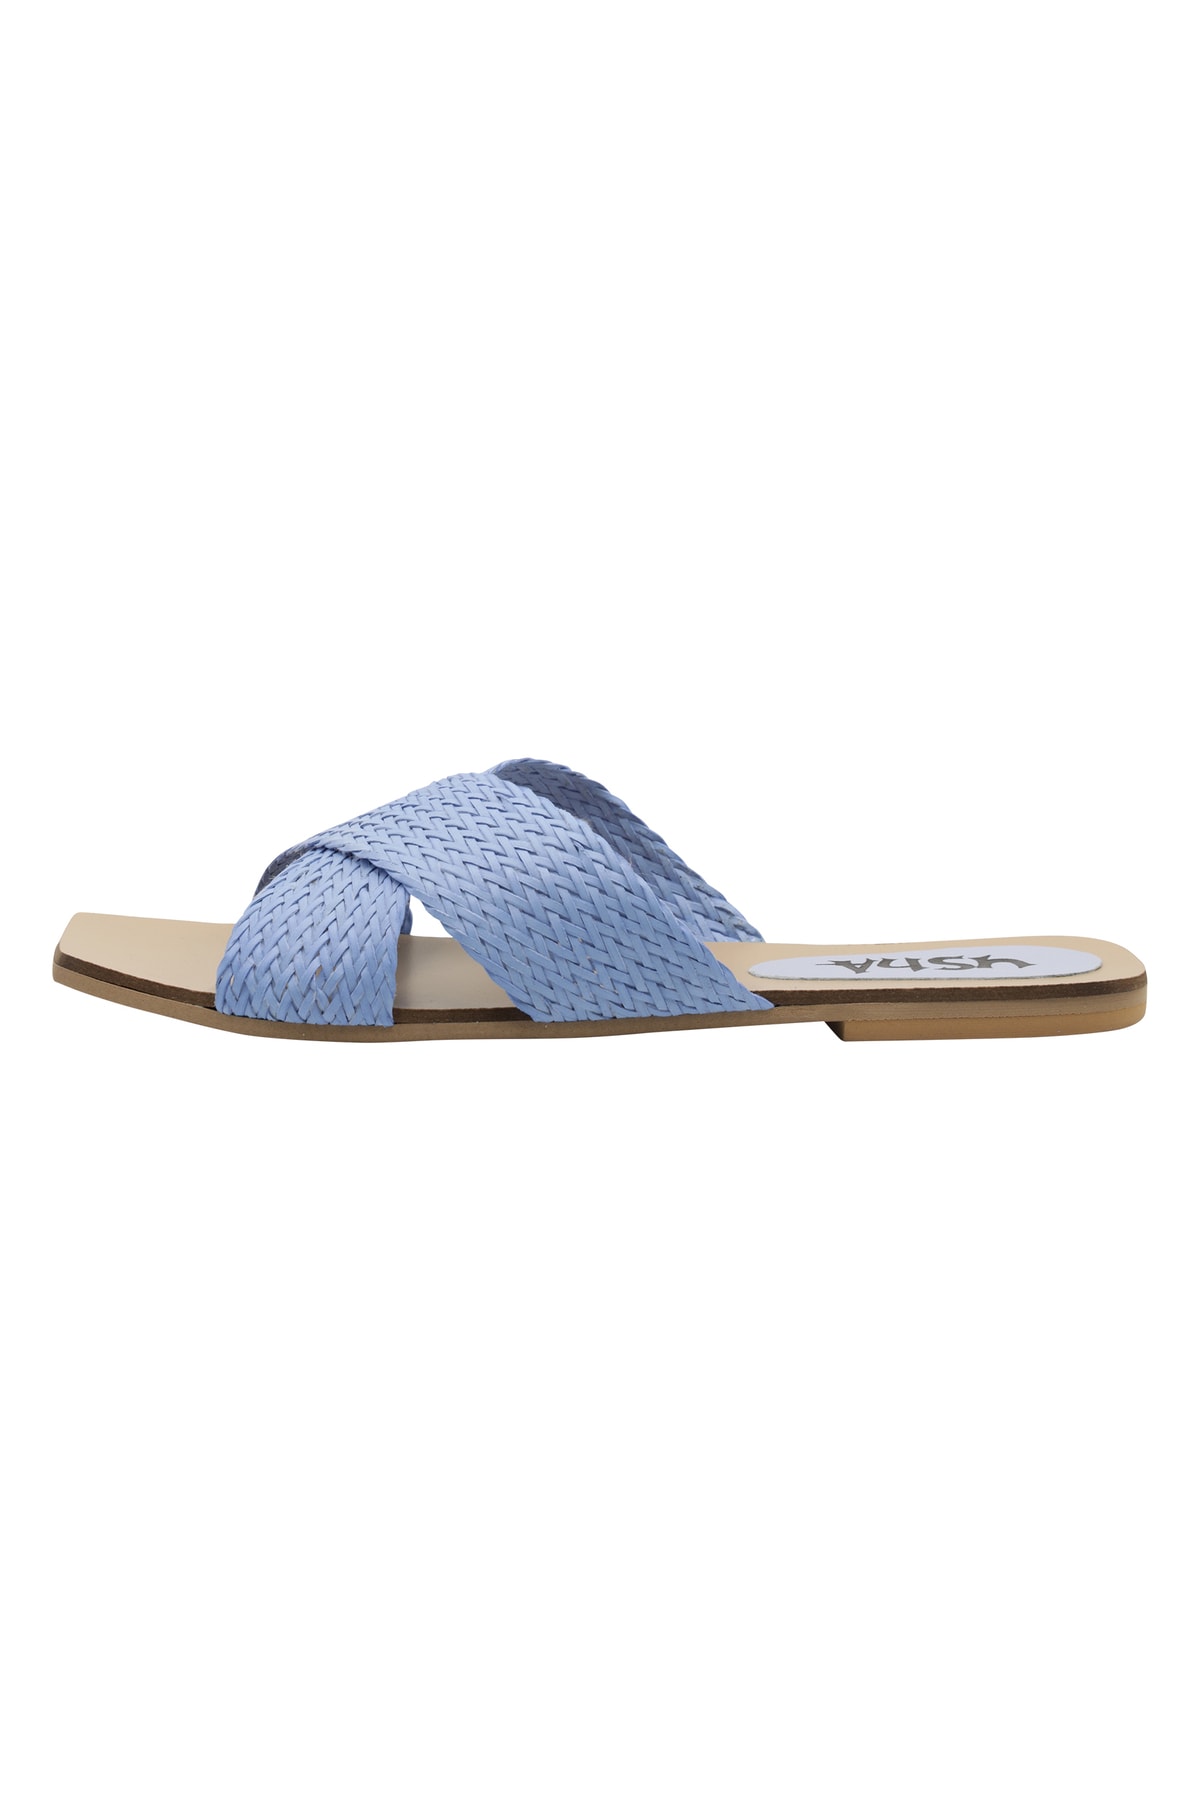 USHA Sandalette Blau Flacher Absatz Fast ausverkauft